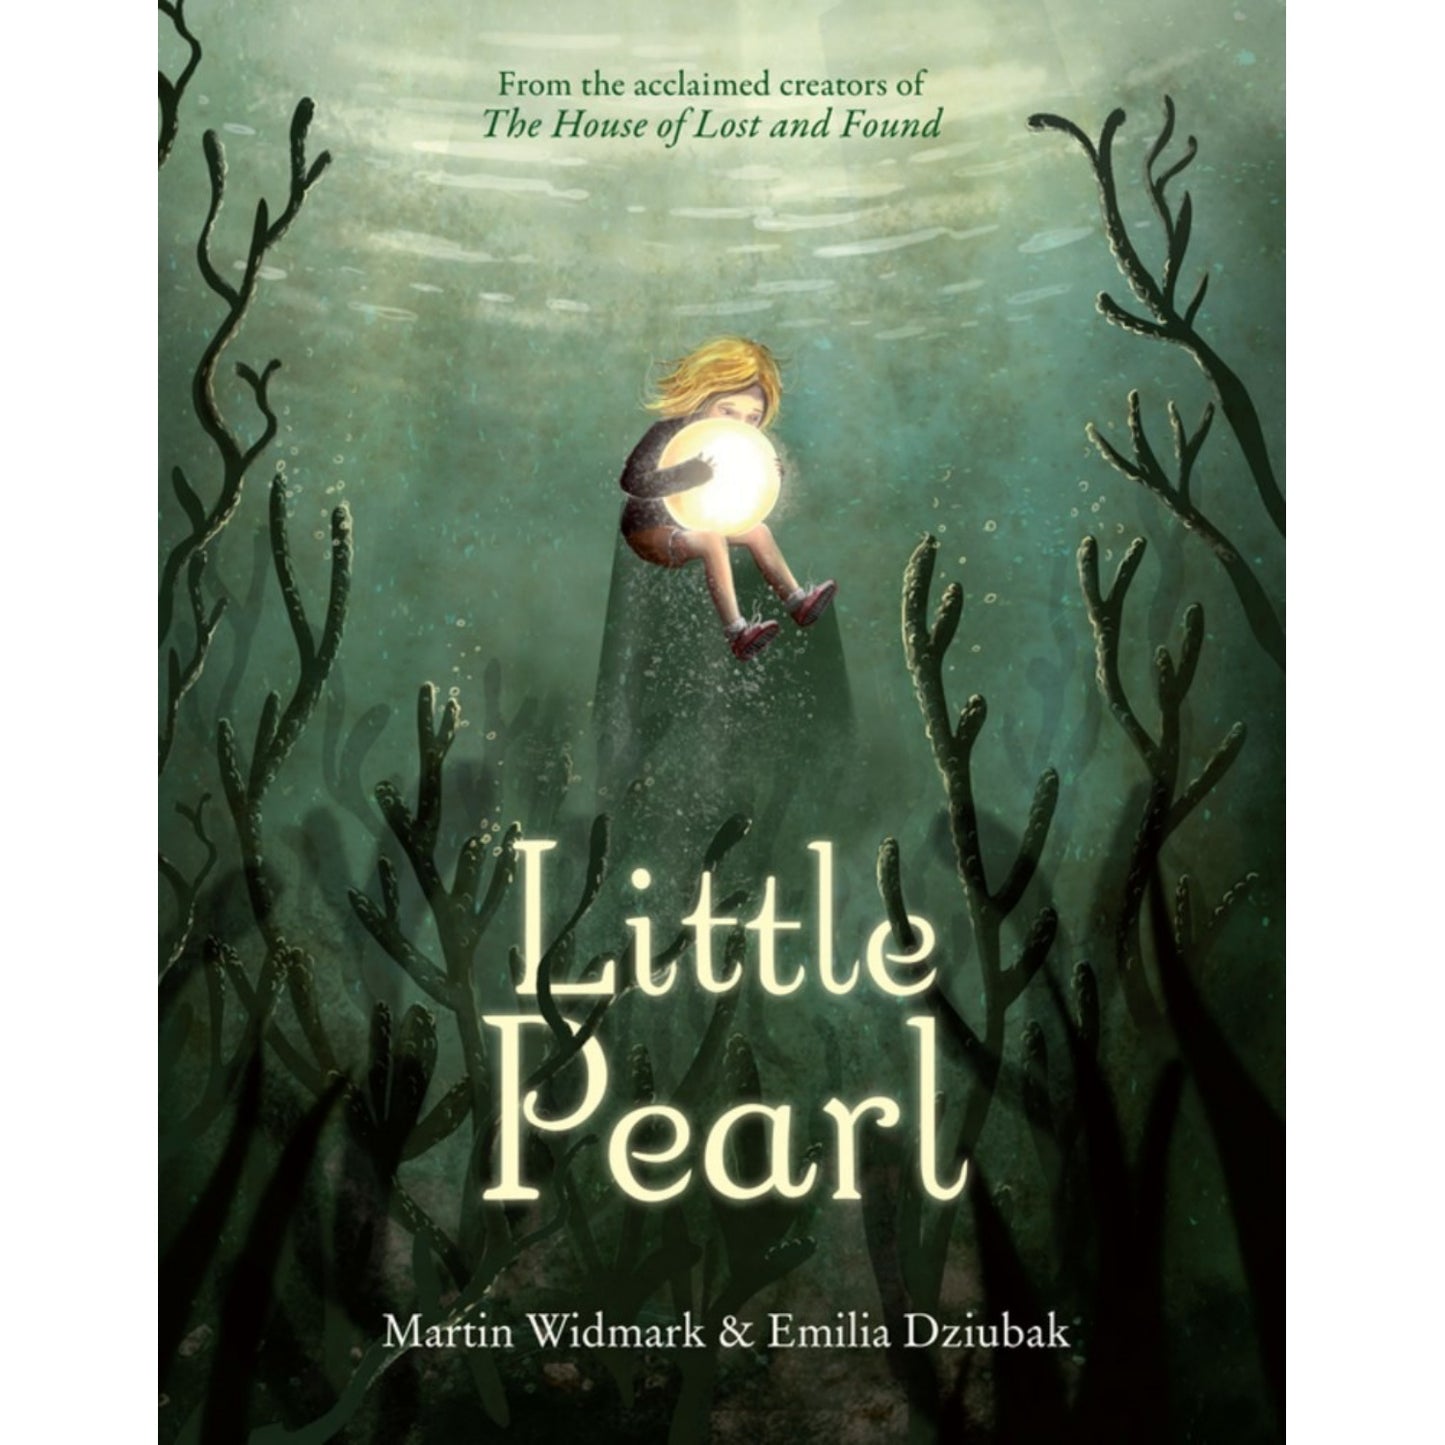 Little Pearl | Hardcover | Children’s Book on Friendship